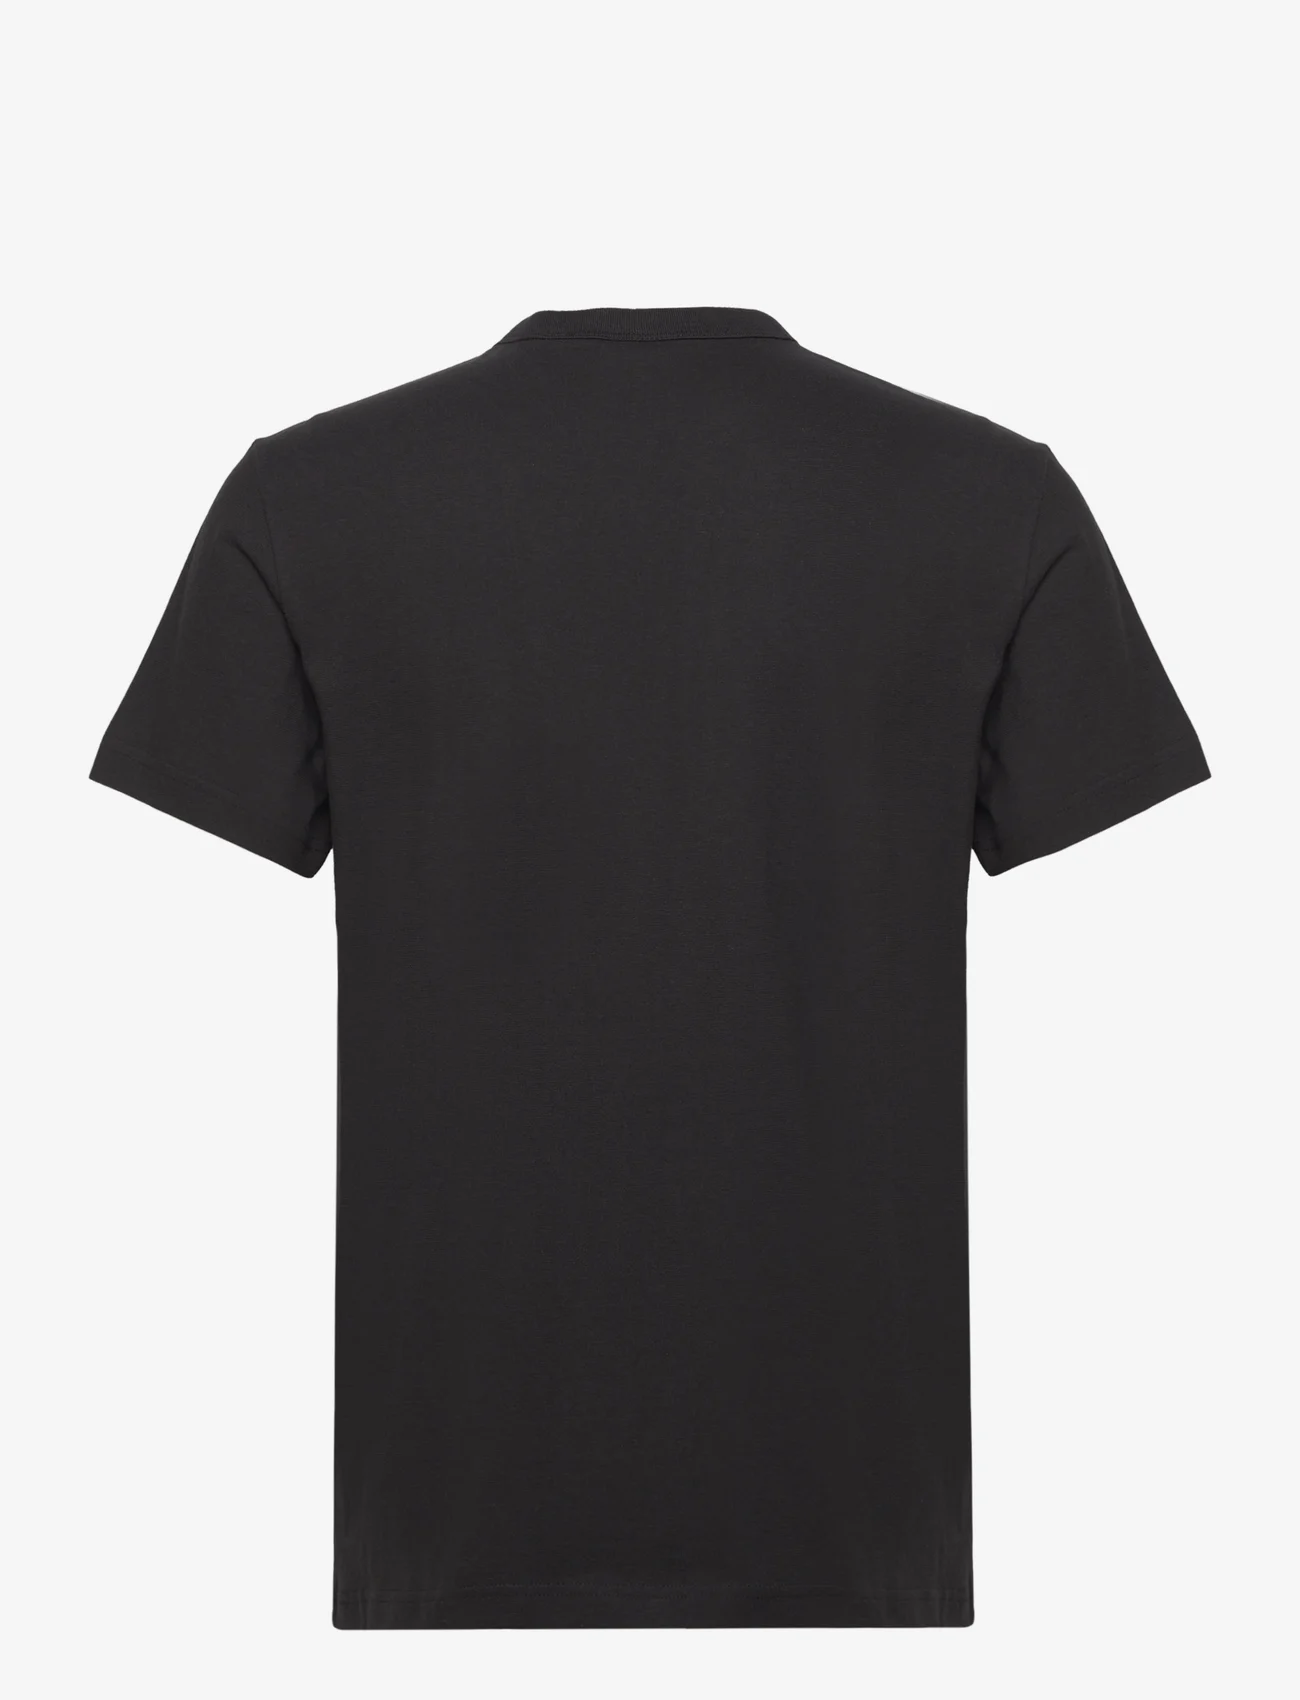 G-Star RAW - Collegic r t - short-sleeved t-shirts - dk black - 1